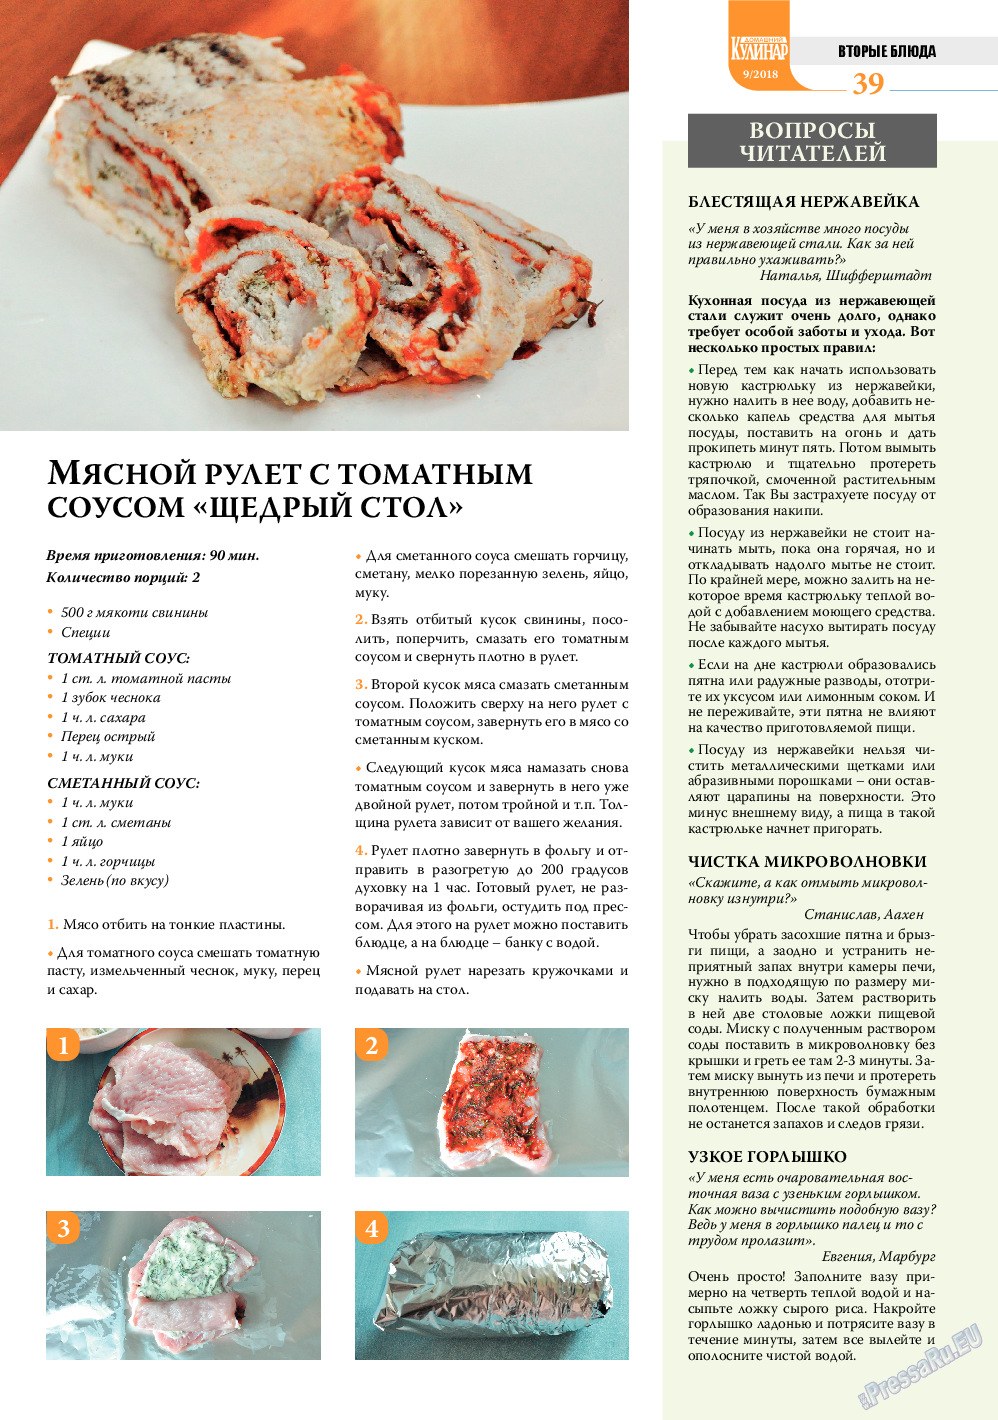 Домашний кулинар (журнал). 2018 год, номер 9, стр. 39